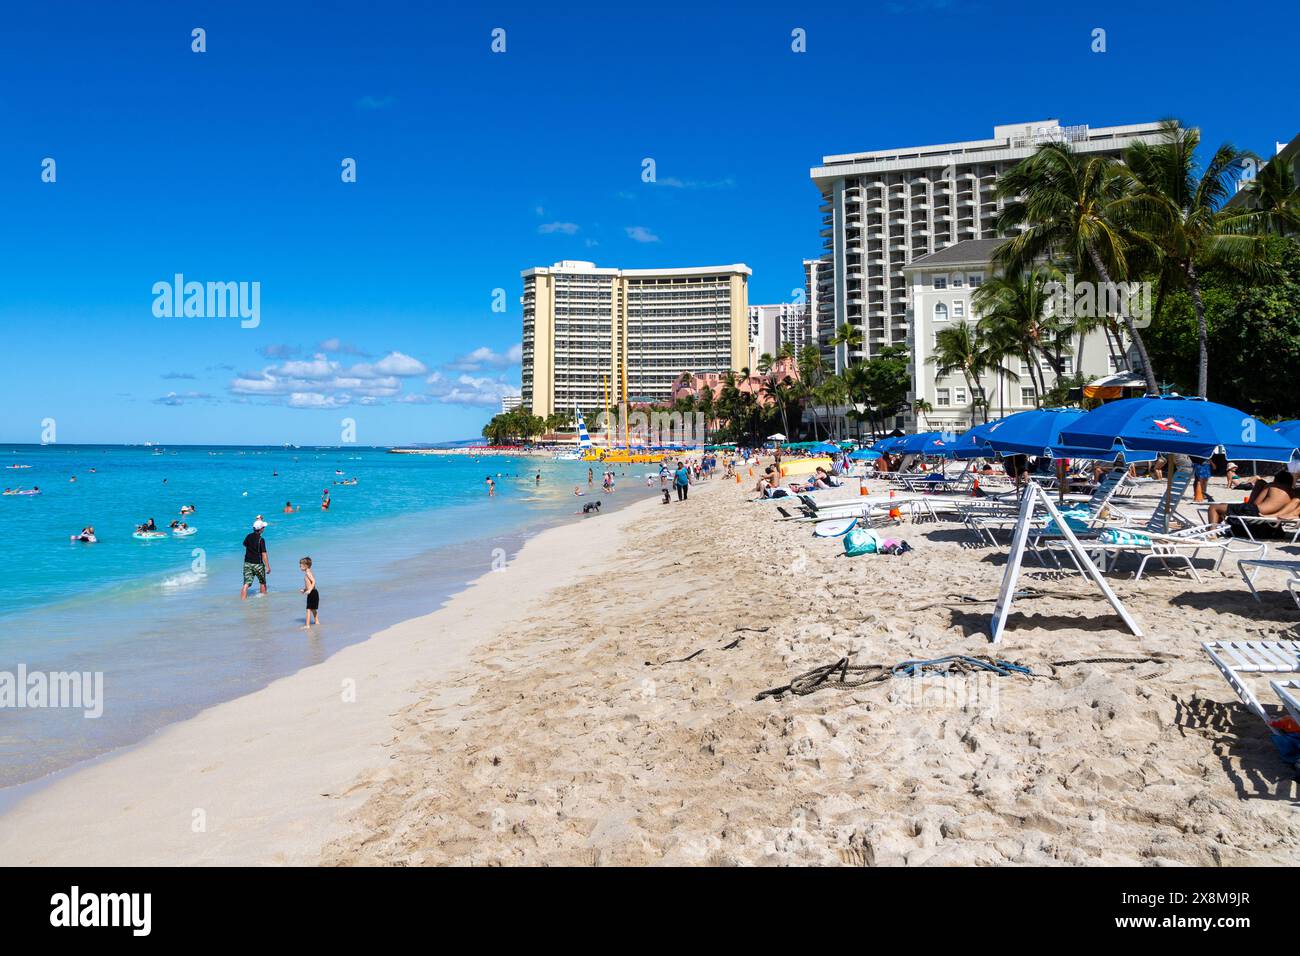 HONOLULU, HAWAII, USA - AUG. 20 2023: Crowded Waikiki Beach in Honolulu with tourists sunbathing and swimming in the Hawaiian Islands. Stock Photo